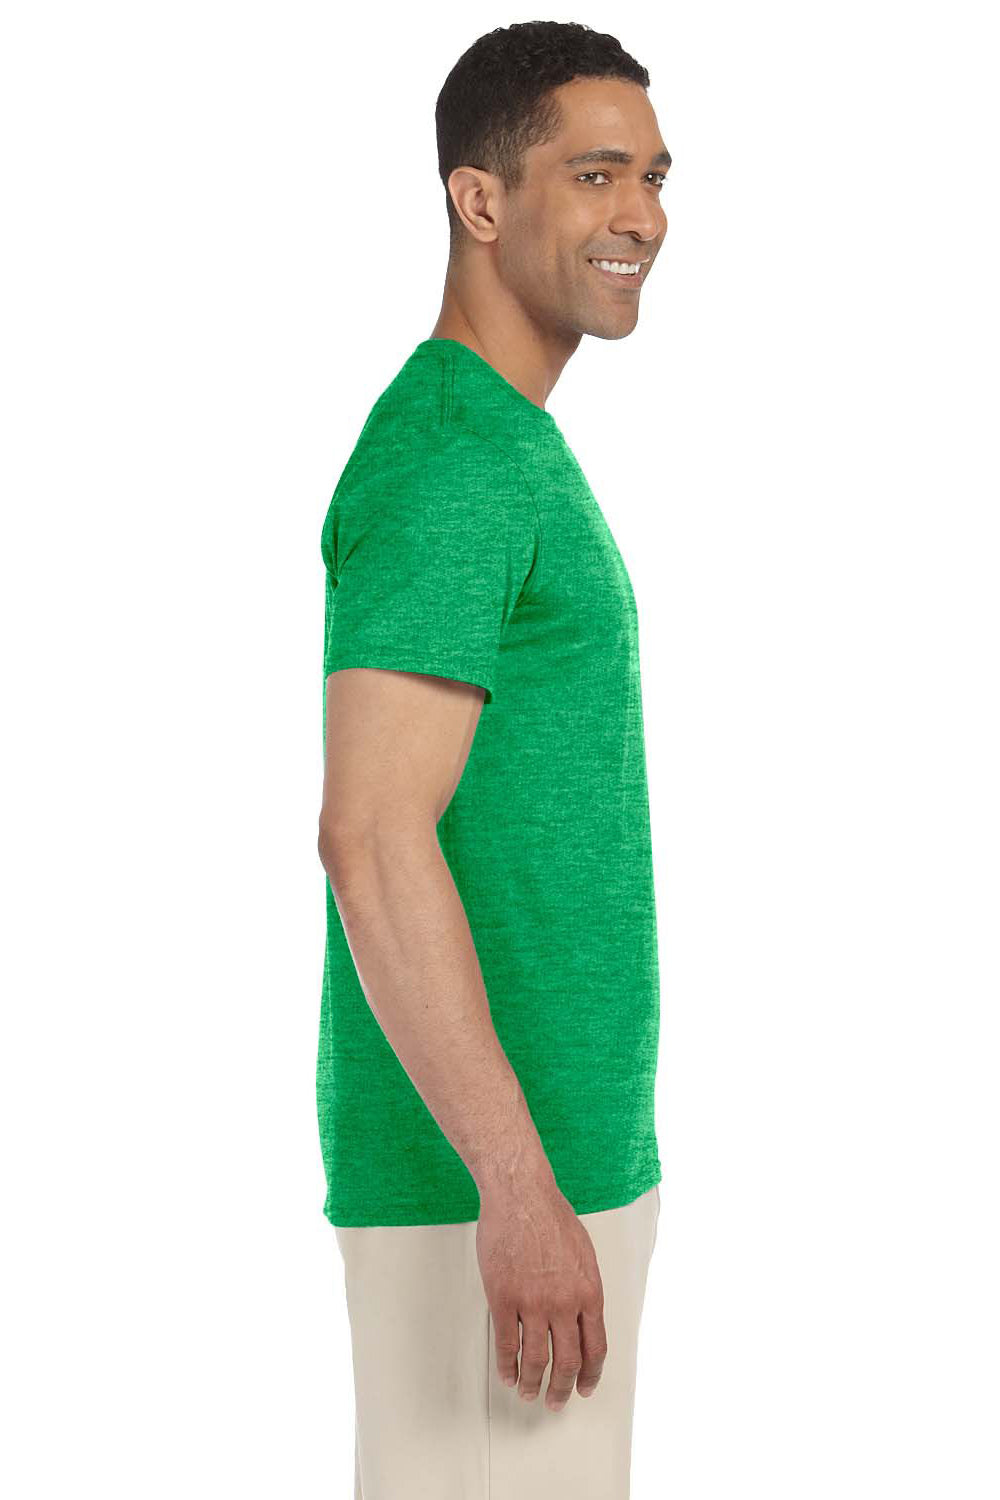 Gildan G640 Mens Softstyle Short Sleeve Crewneck T-Shirt Heather Irish Green Side